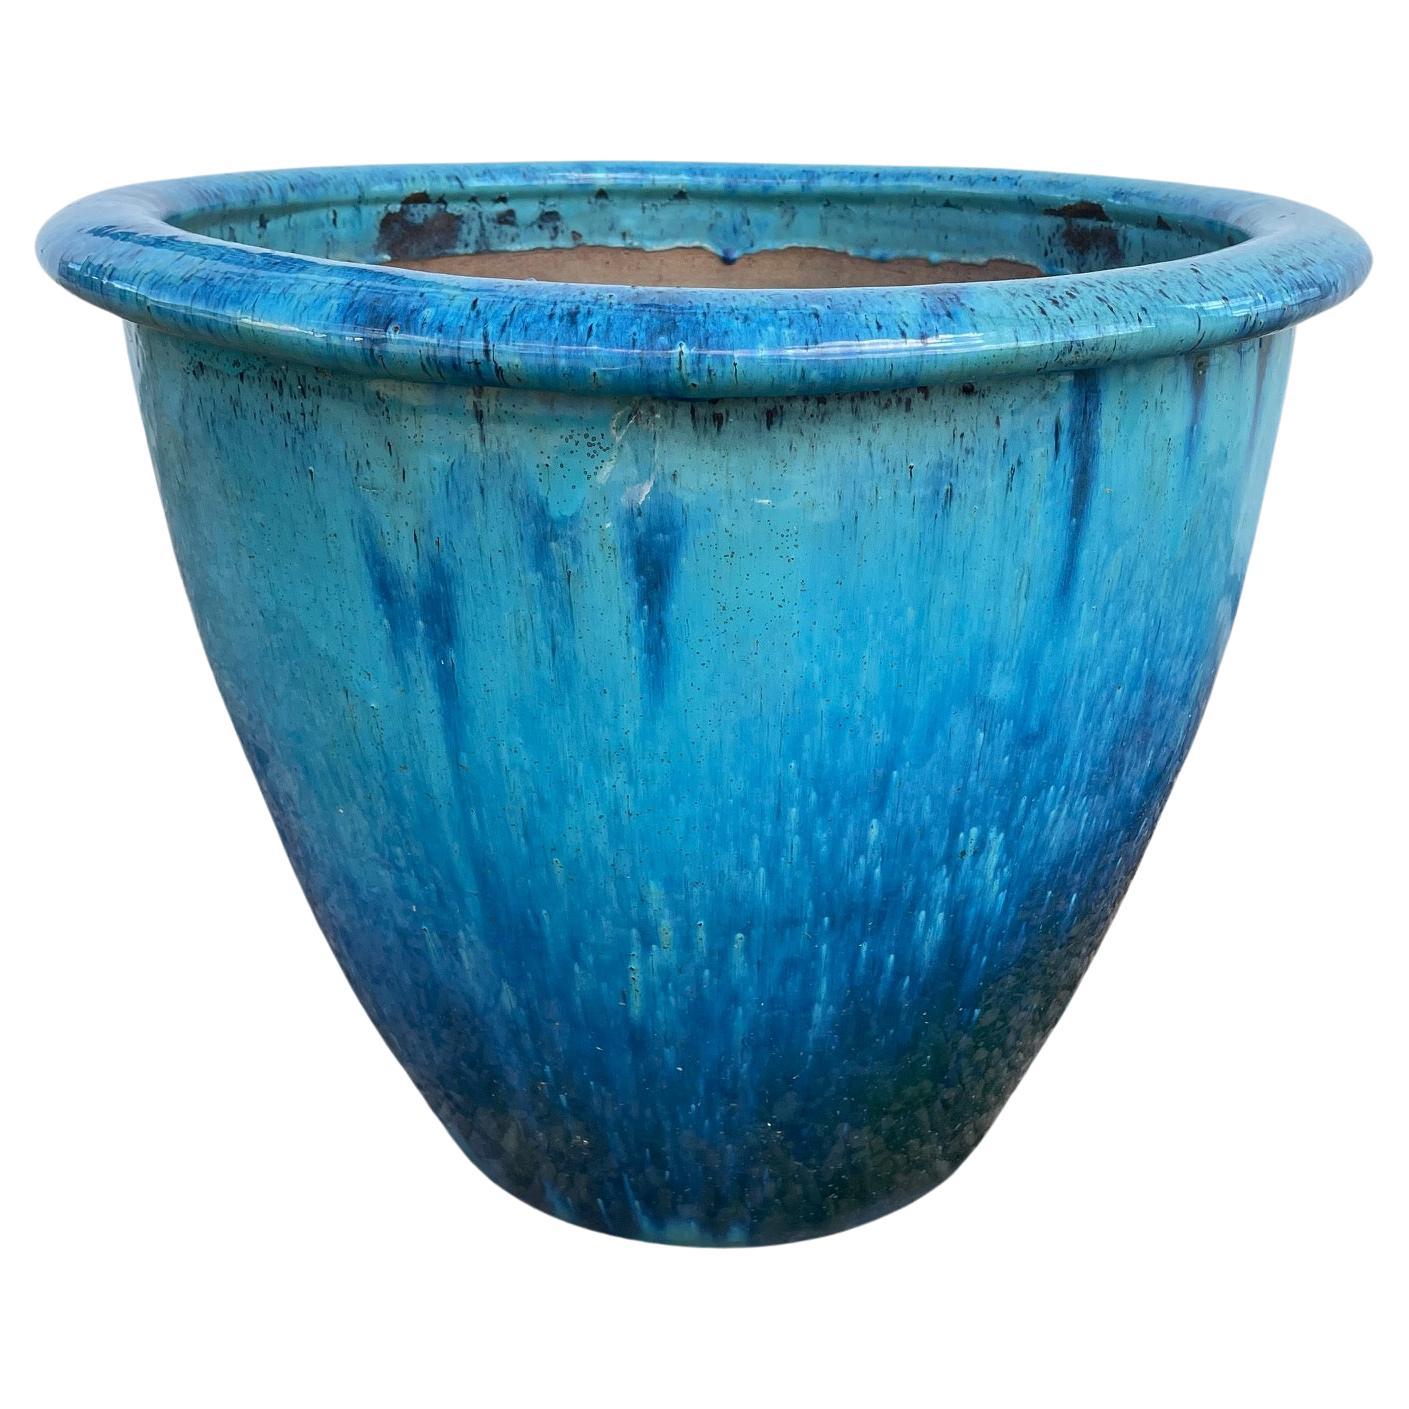 20th century French Blue Ceramic Flower Planter